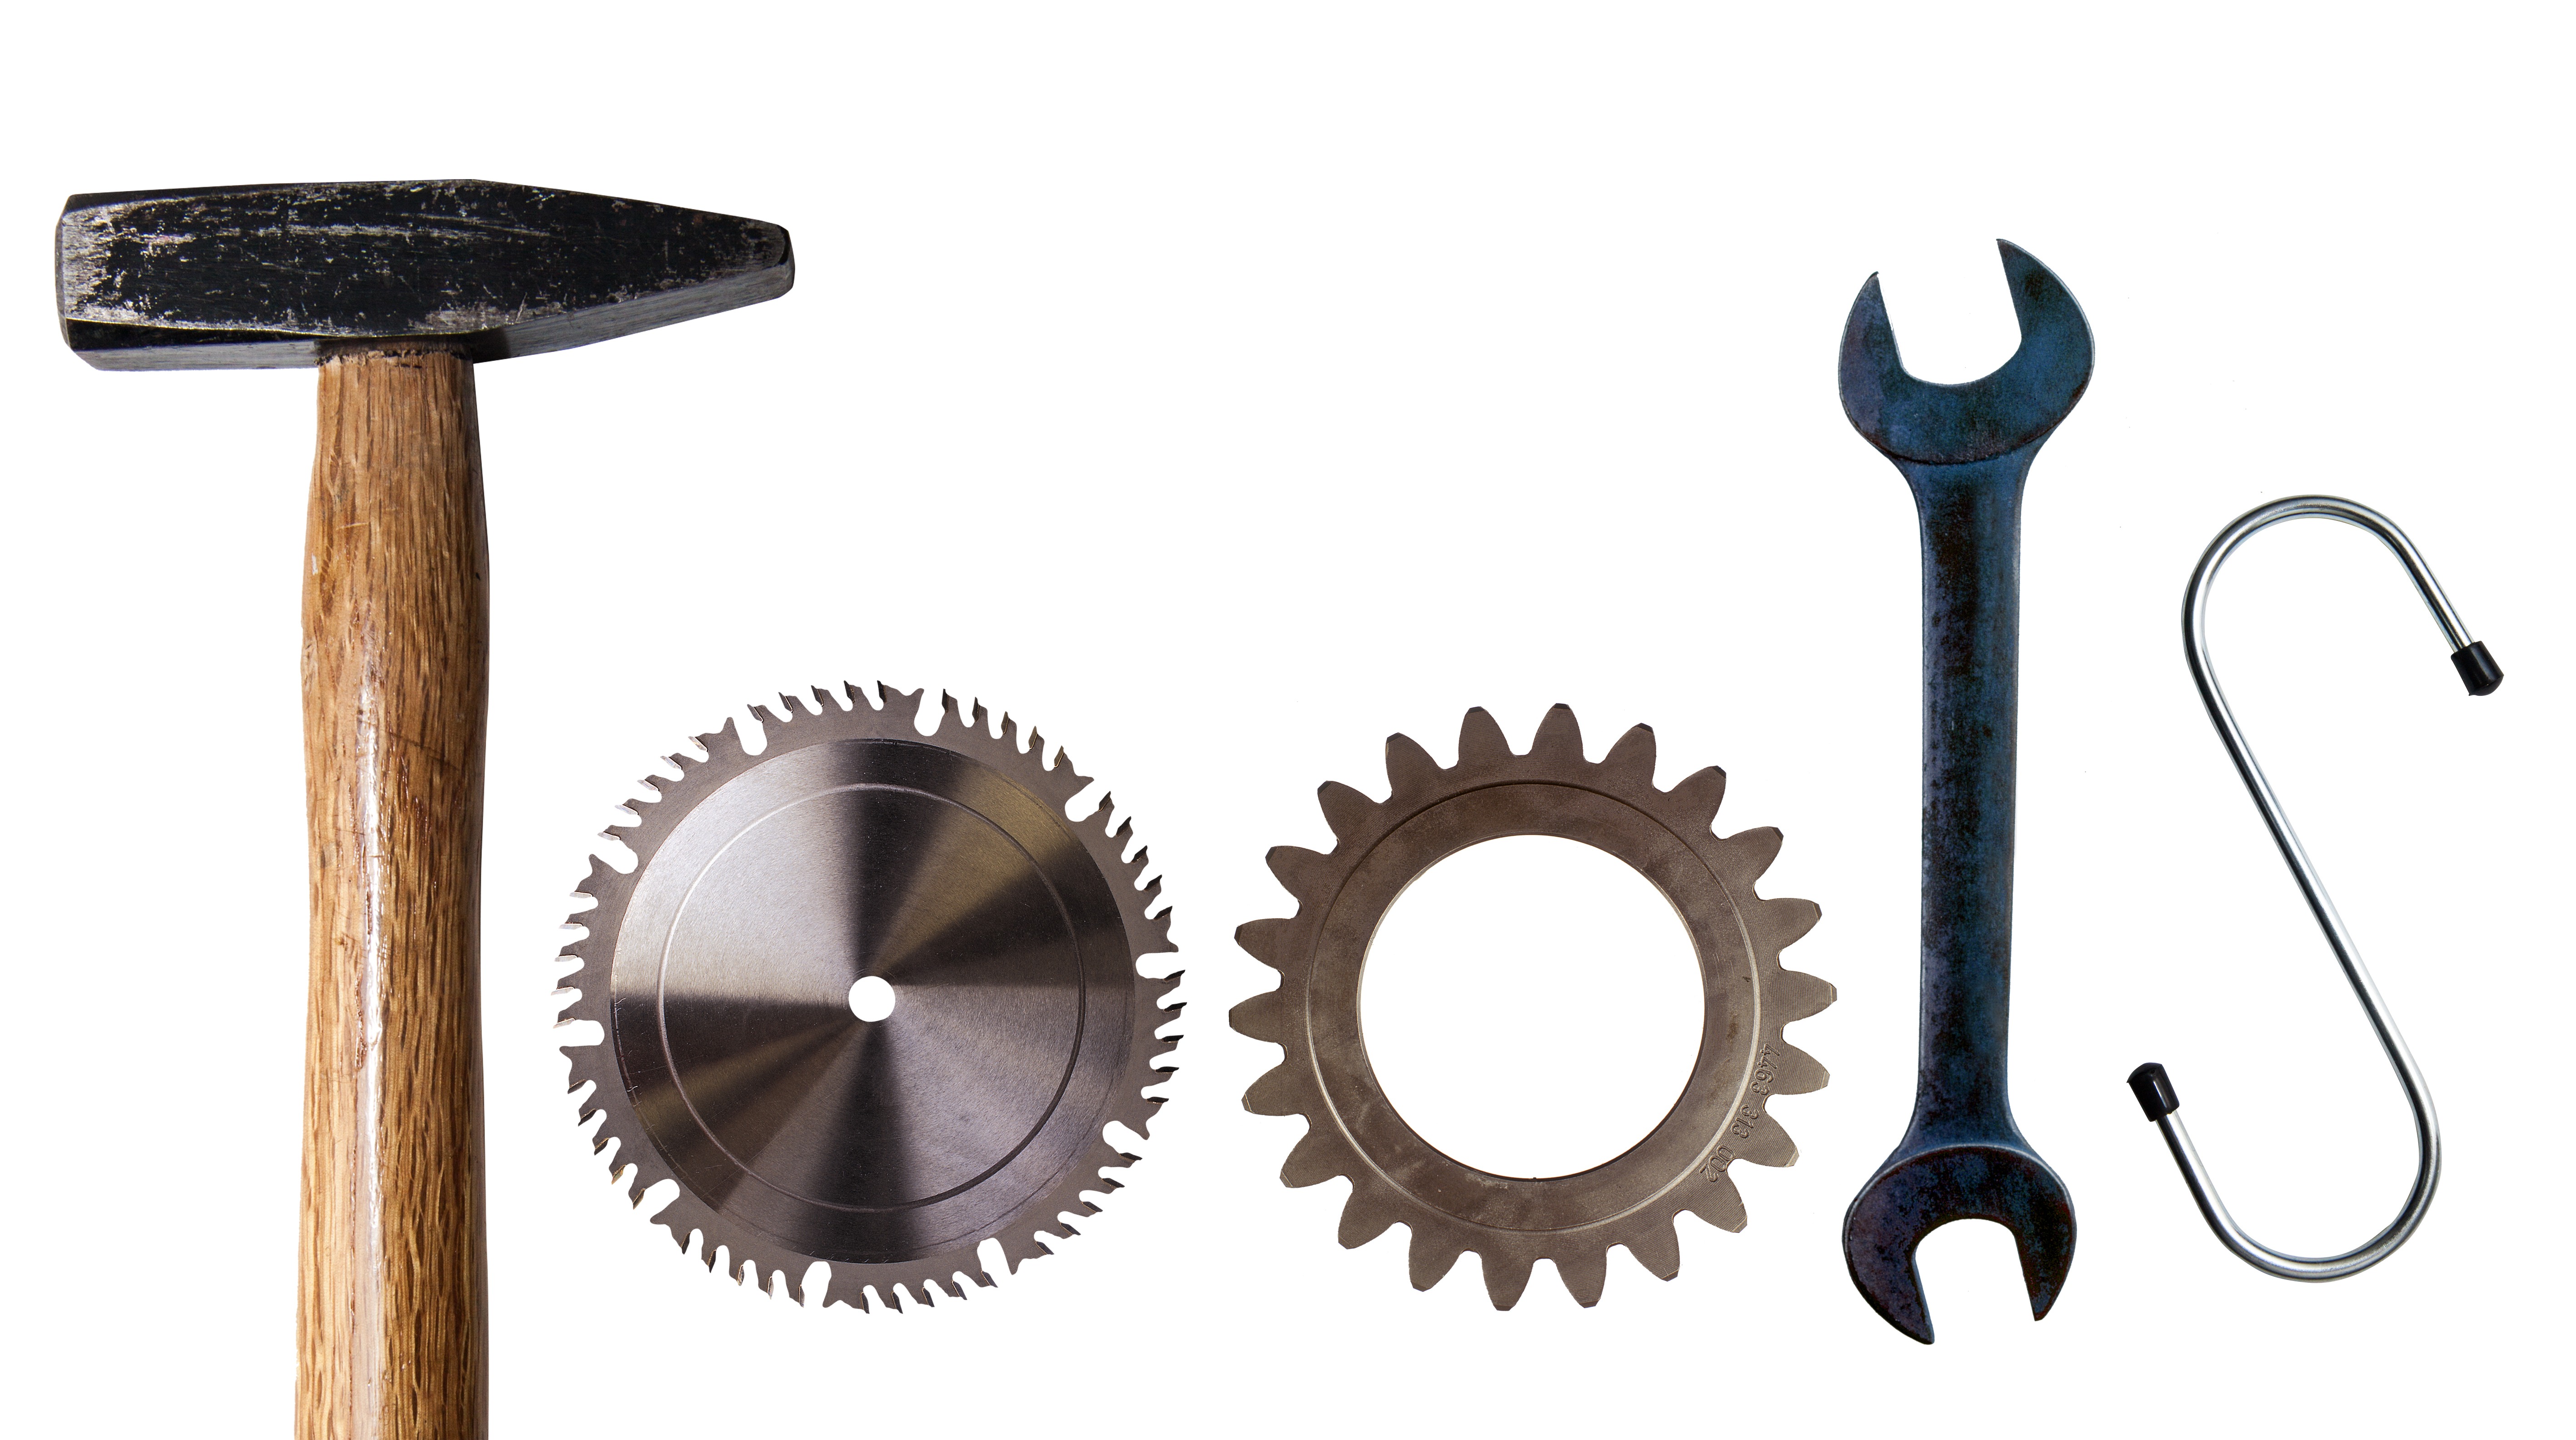 tool-equipment-product-font-illustration-logo-1347523-pxhere.com